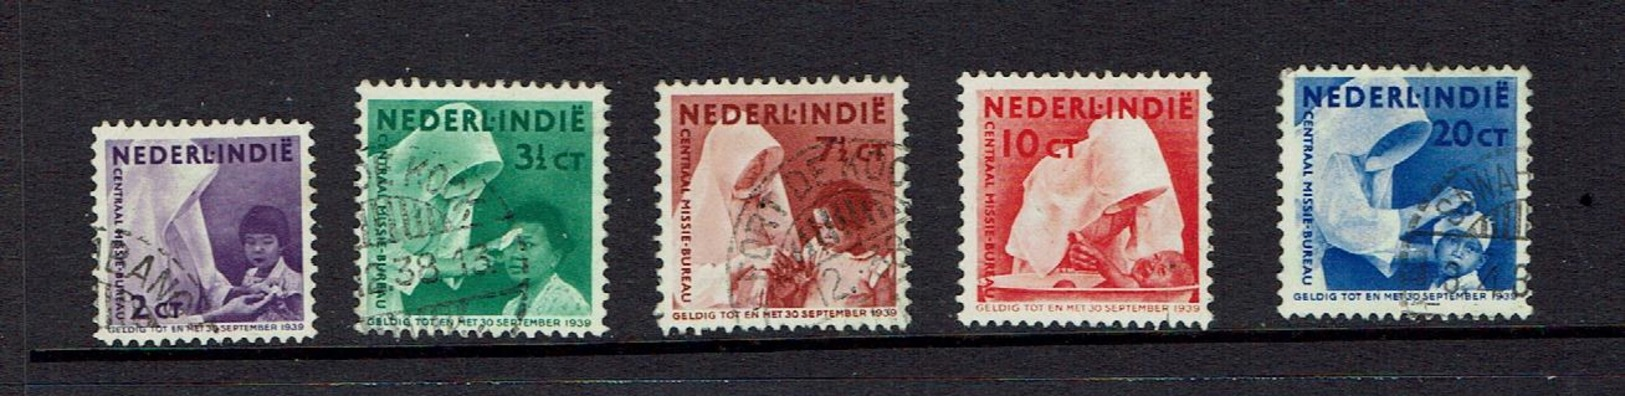 NETHERLAND INDIES...used - Netherlands Indies